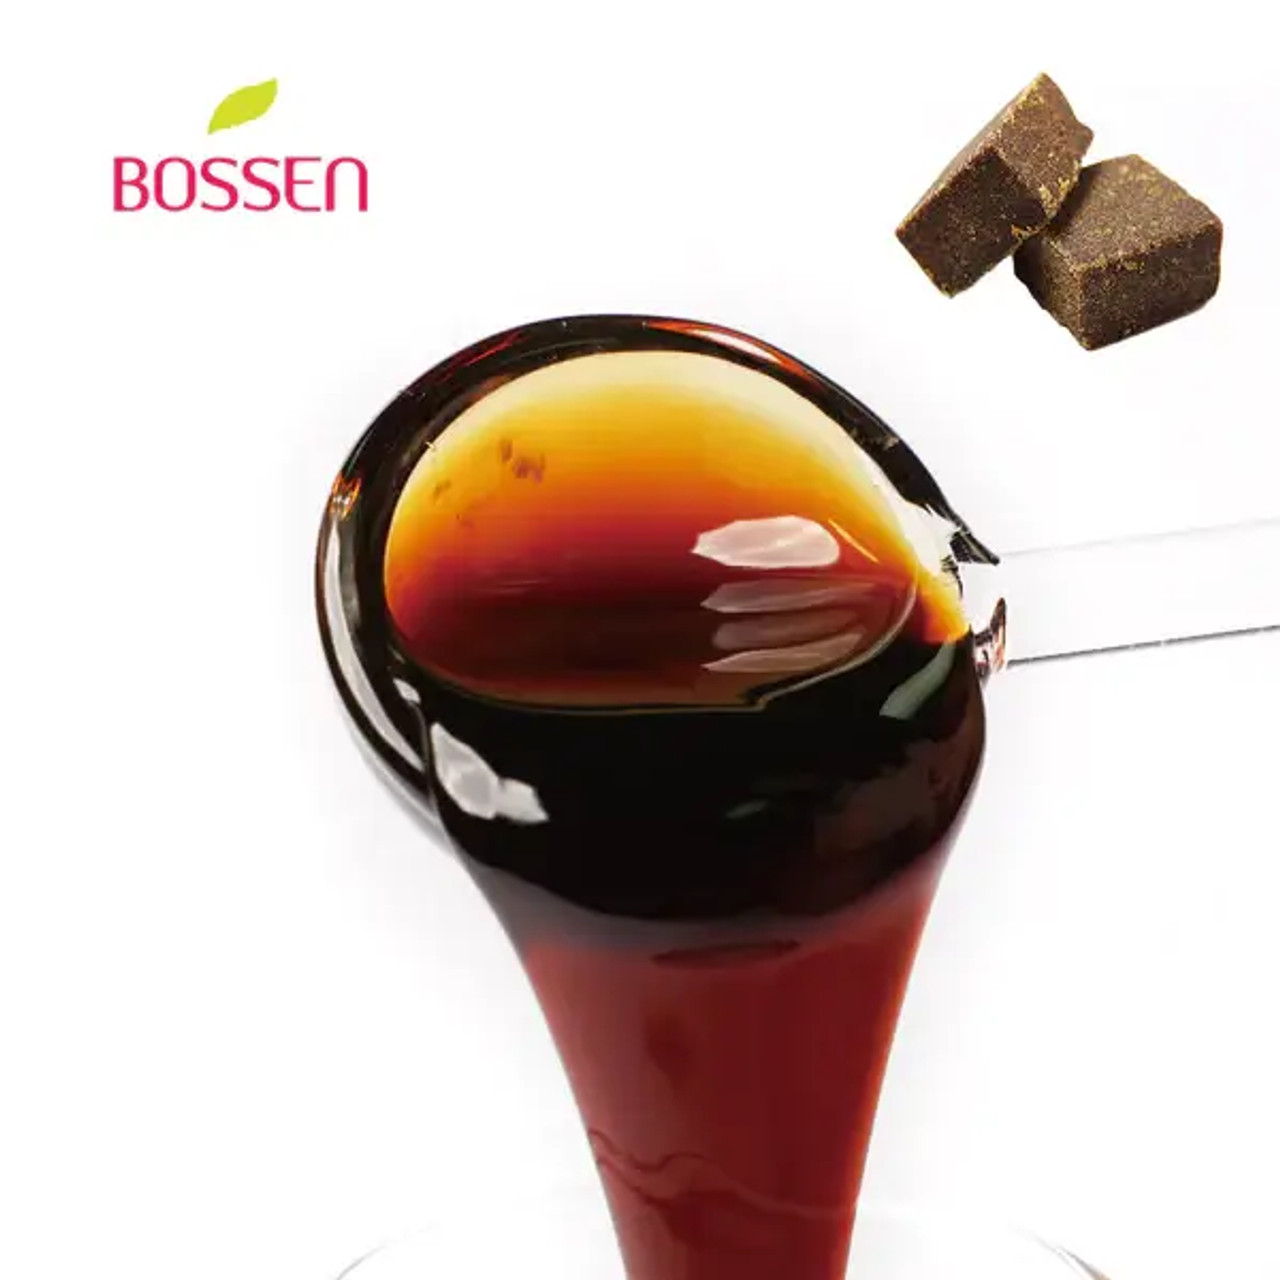 Bossen Premium Brown Sugar Bubble Tea Concentrated Syrup 5 kg (11.2 lb.) - Rich Elegance(4/Case)-Chicken Pieces